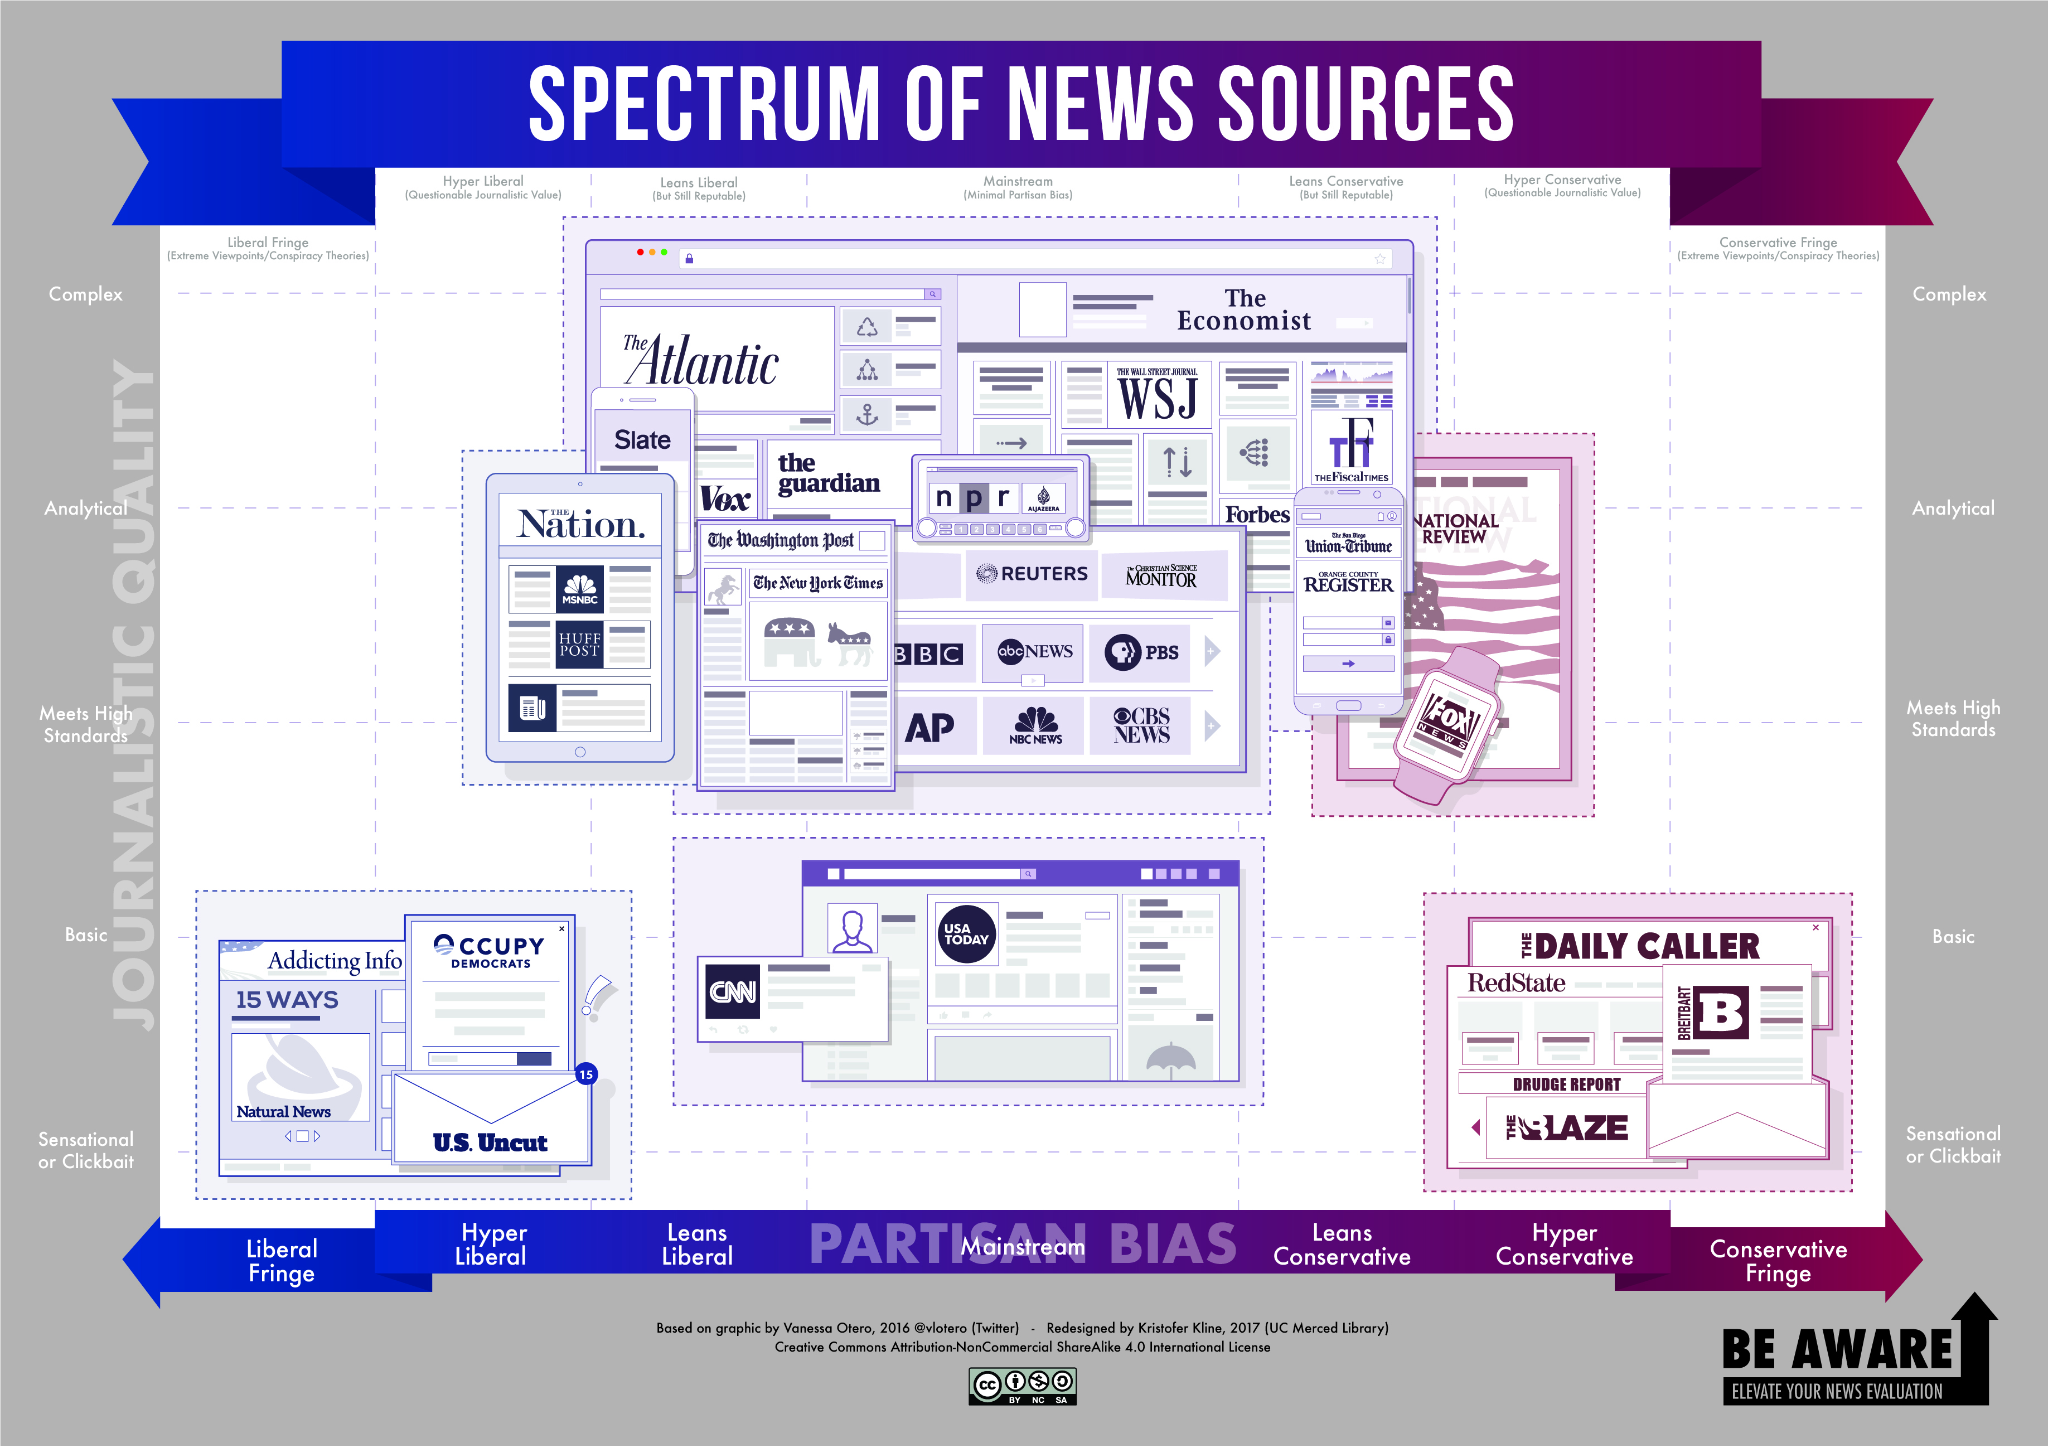 Mainstream English-language news sources on a partisan spectrum